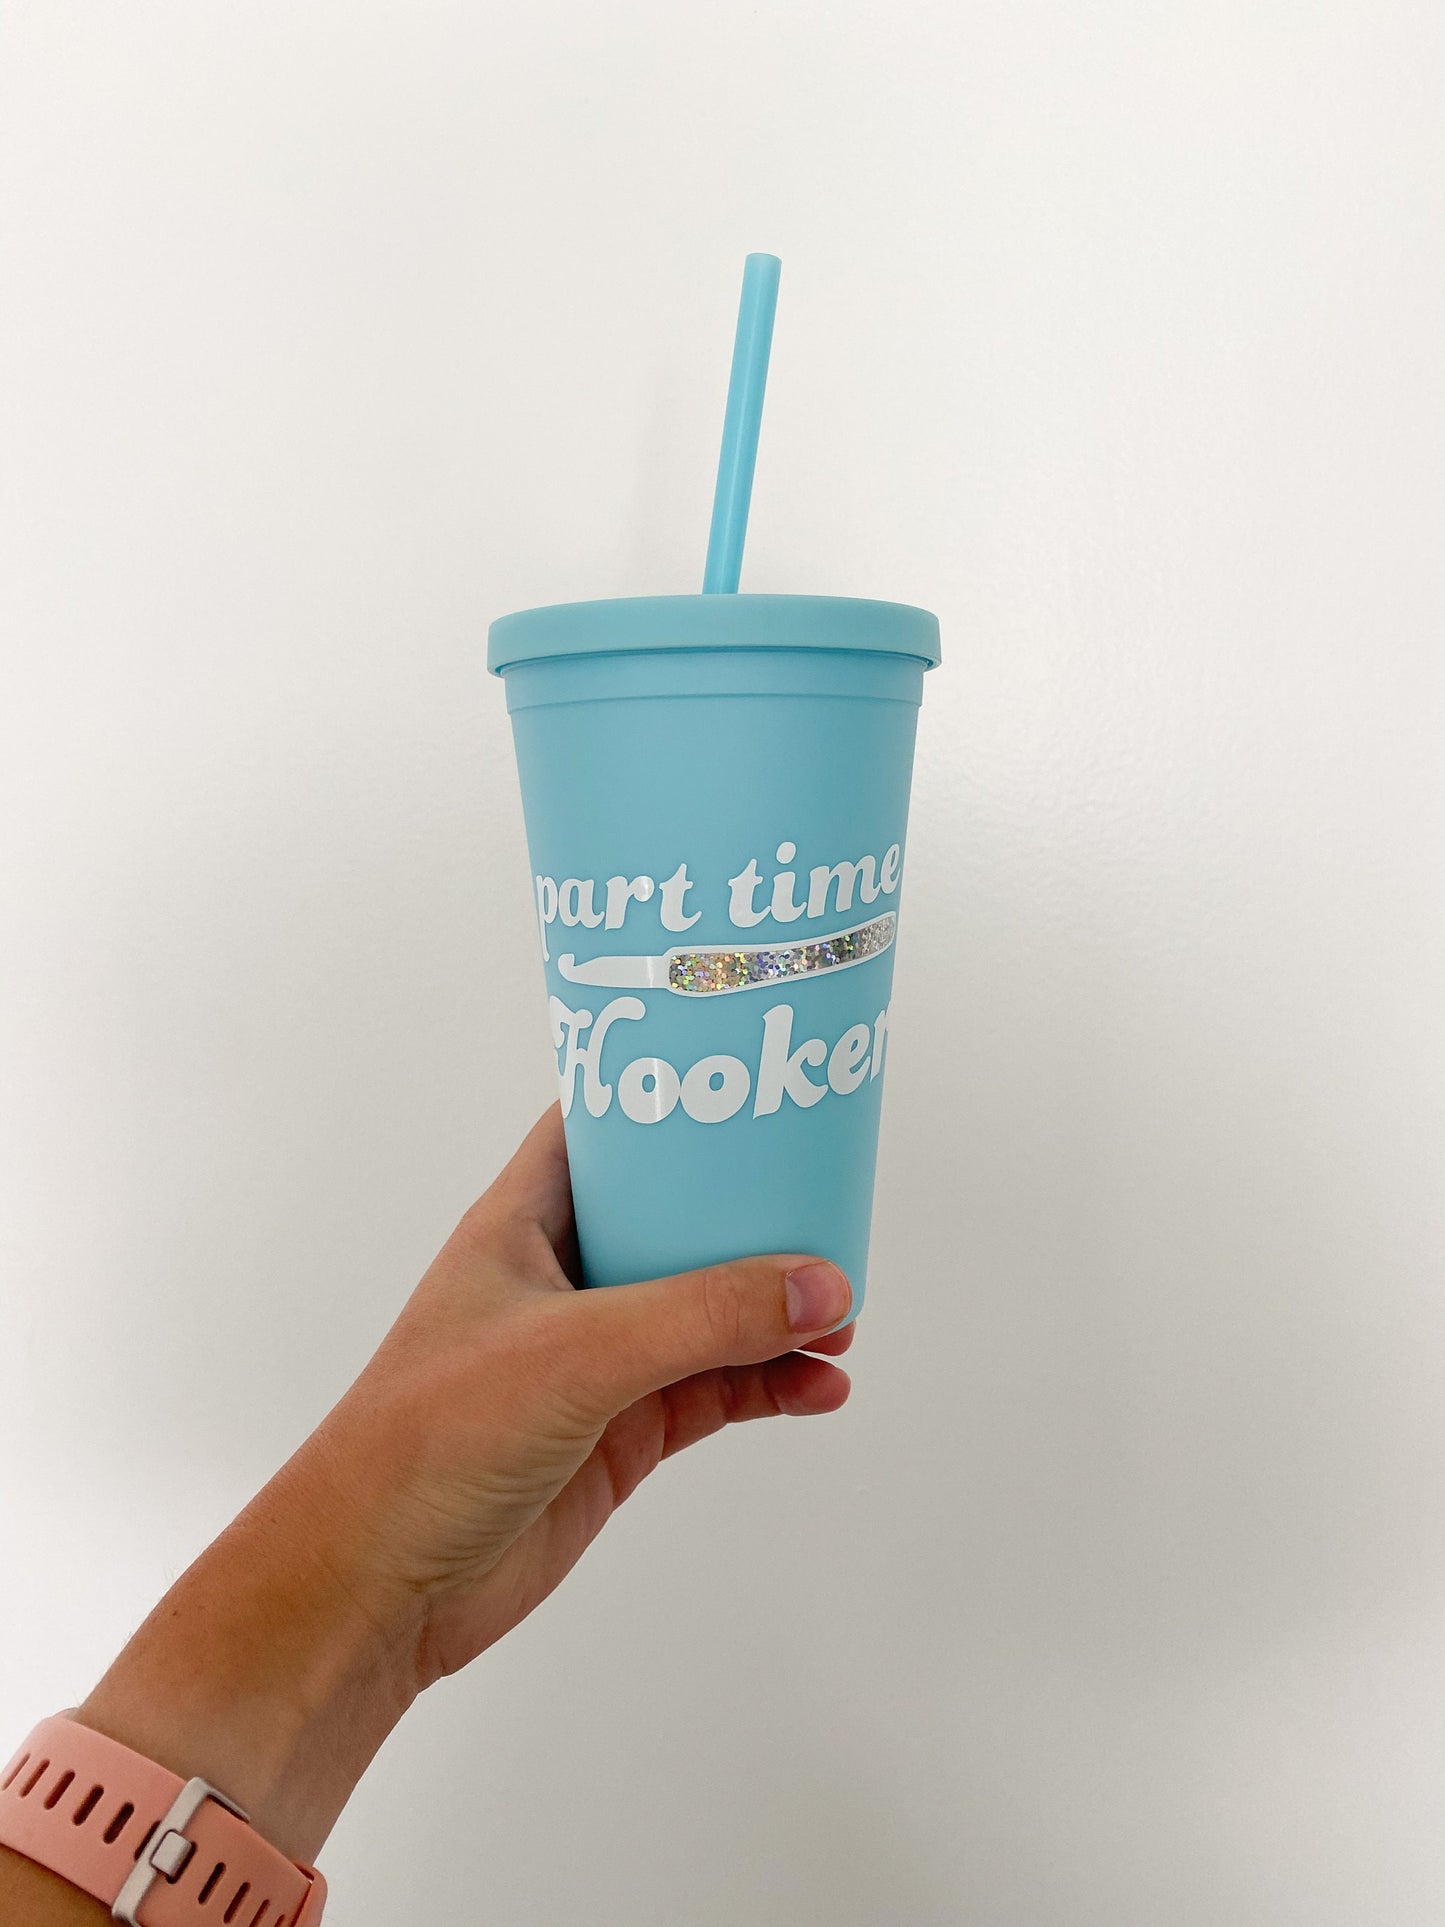 LT BLUE Part Time Hooker OR Maker Fuel 16oz reusable tumbler cup